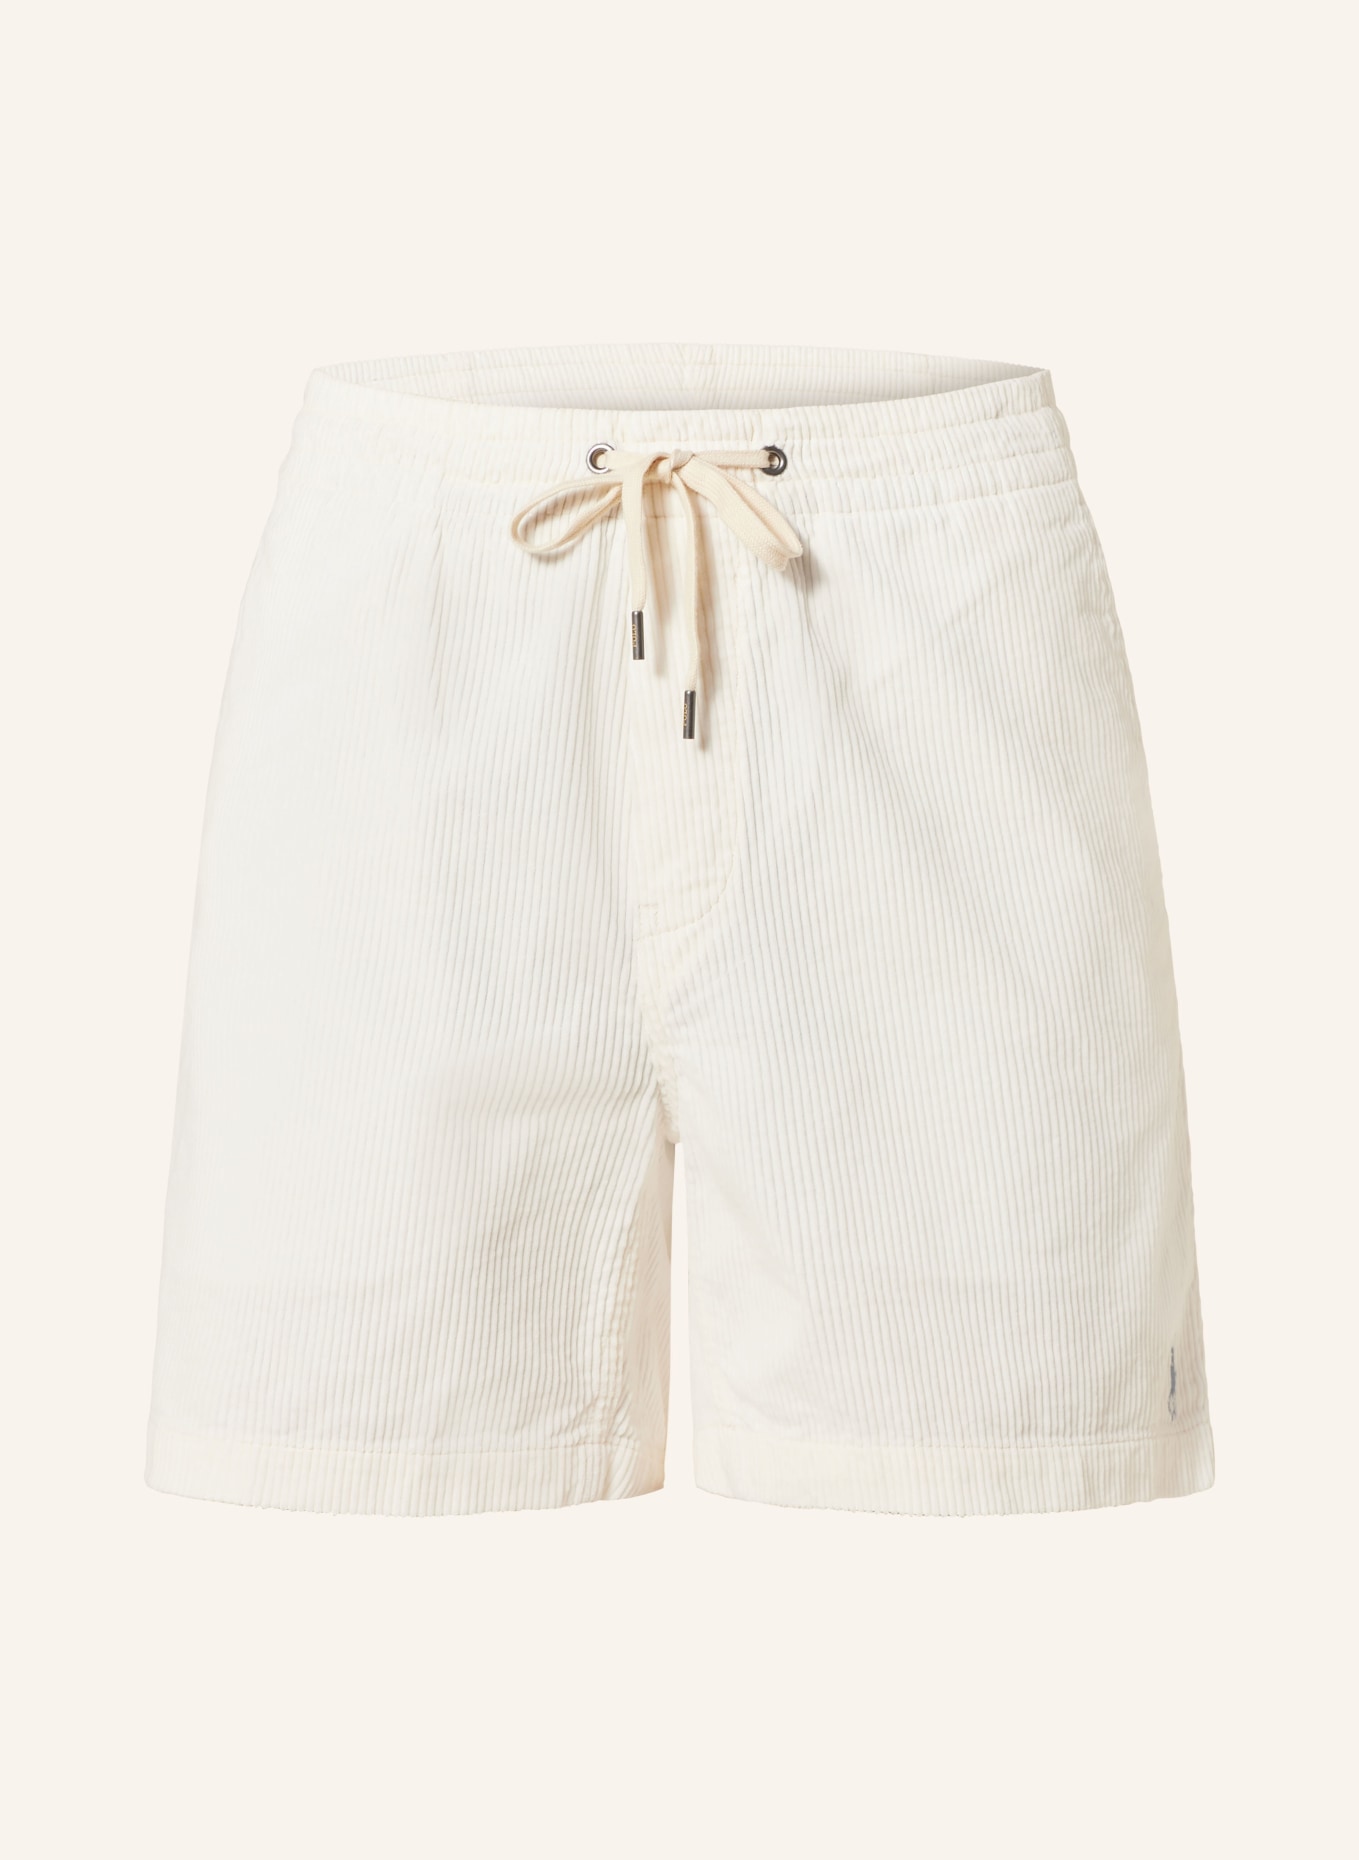 POLO RALPH LAUREN Cord-Shorts Classic Fit, Farbe: WEISS (Bild 1)